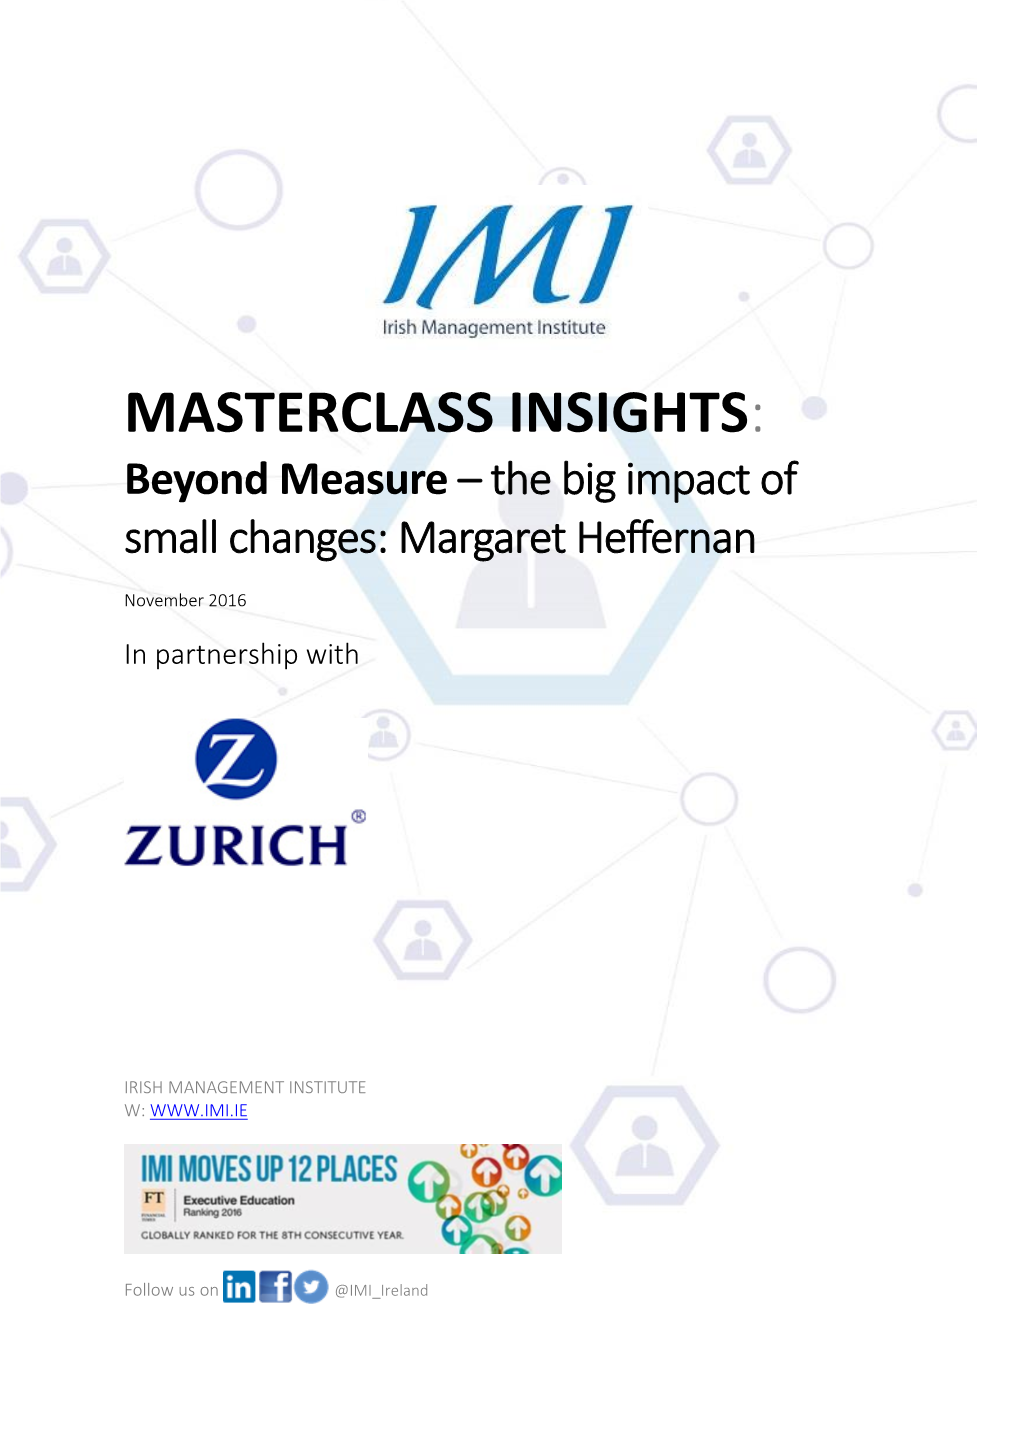 MASTERCLASS INSIGHTS: Beyond Measure – the Big Impact of Small Changes: Margaret Heffernan